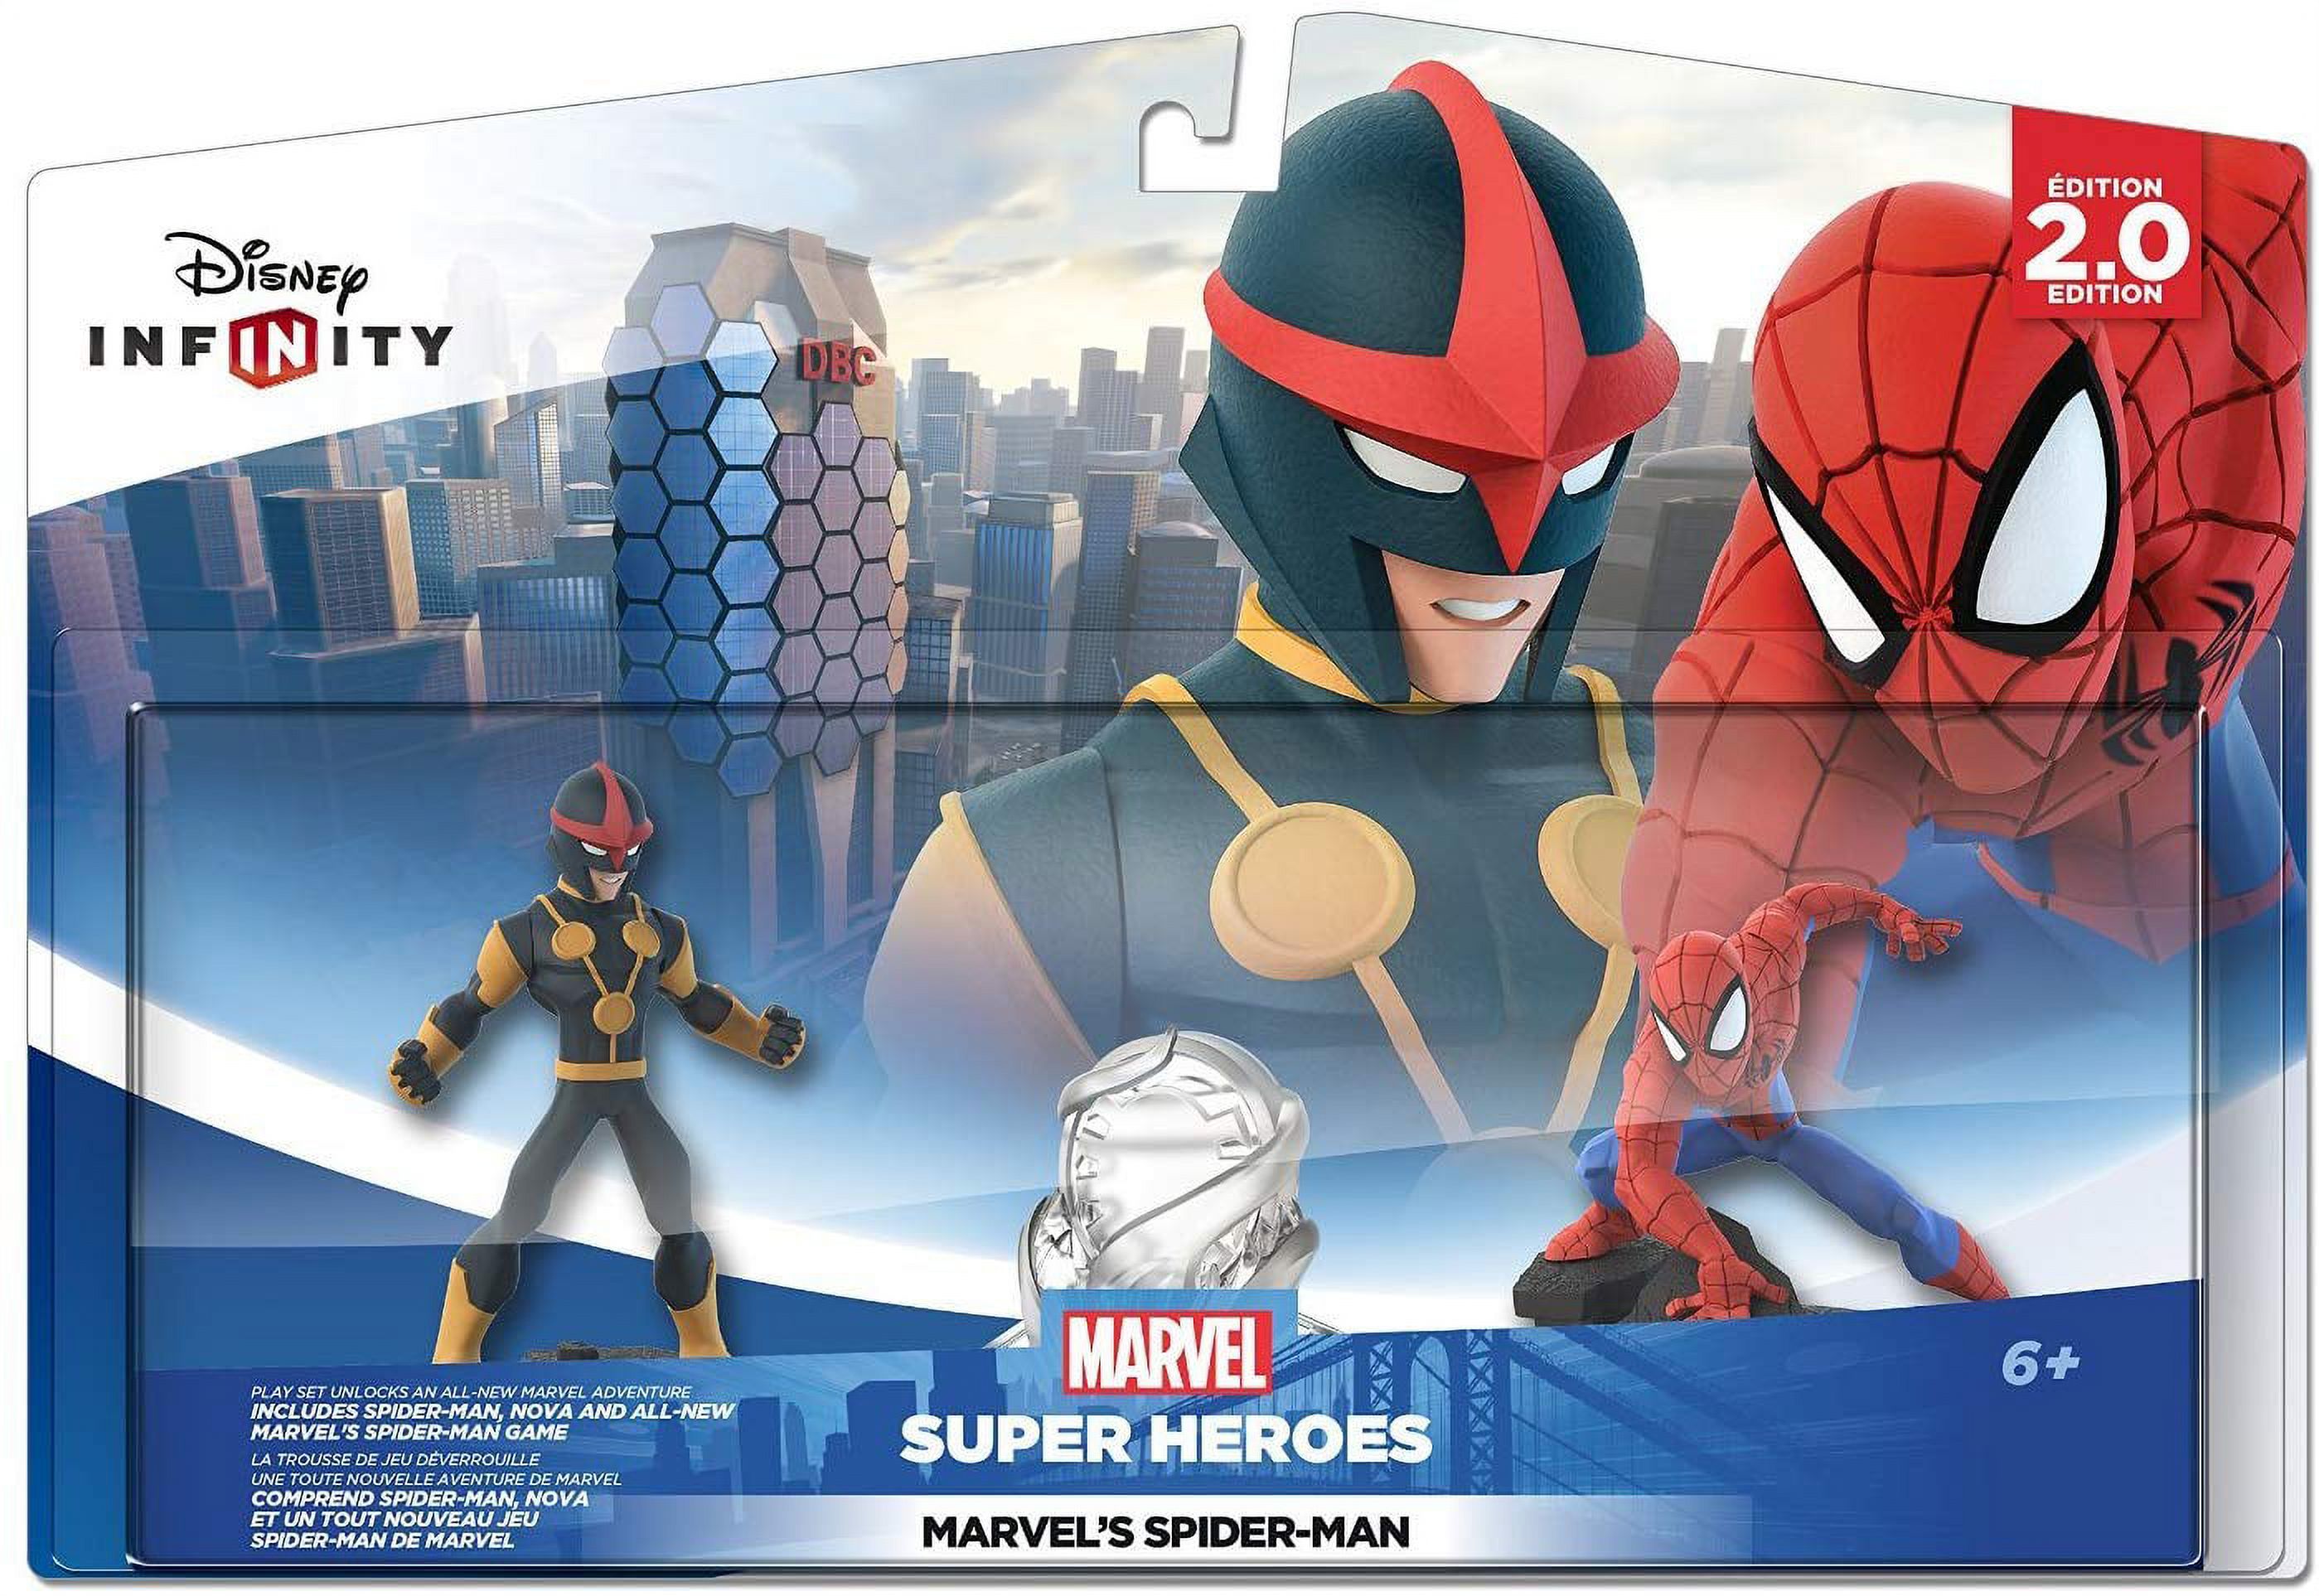 Disney Infinity: Marvel Super Heroes (2.0 Edition) - Marvel's Spider-Man Play Set (Universal) - image 4 of 4